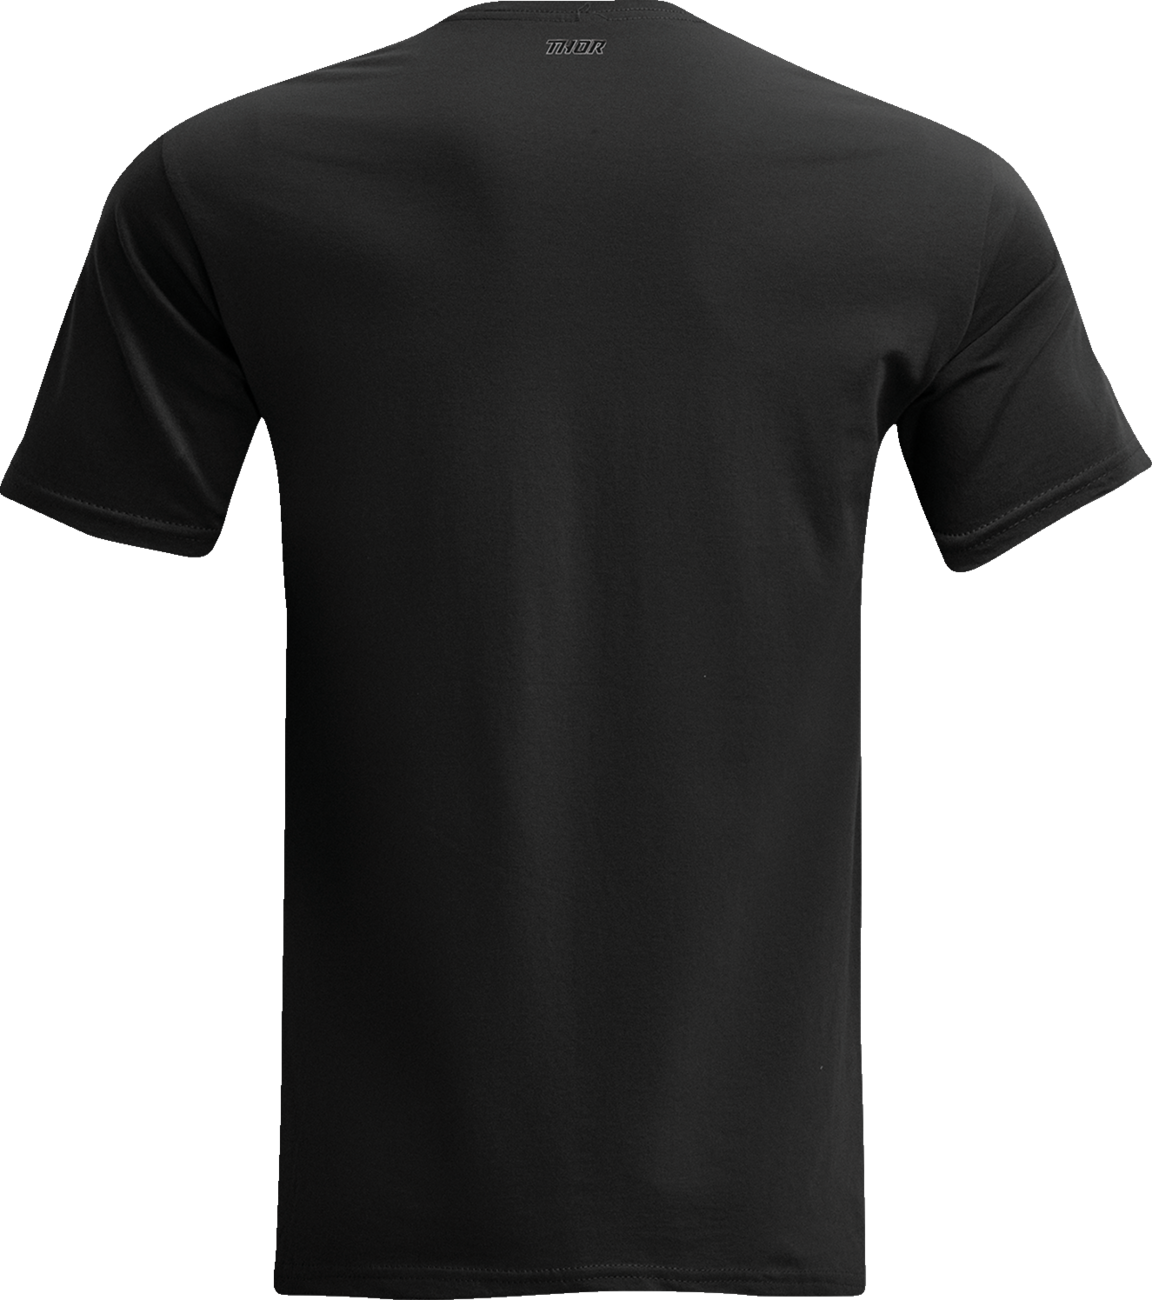 THOR Aerosol T-Shirt - Black - Medium 3030-23537